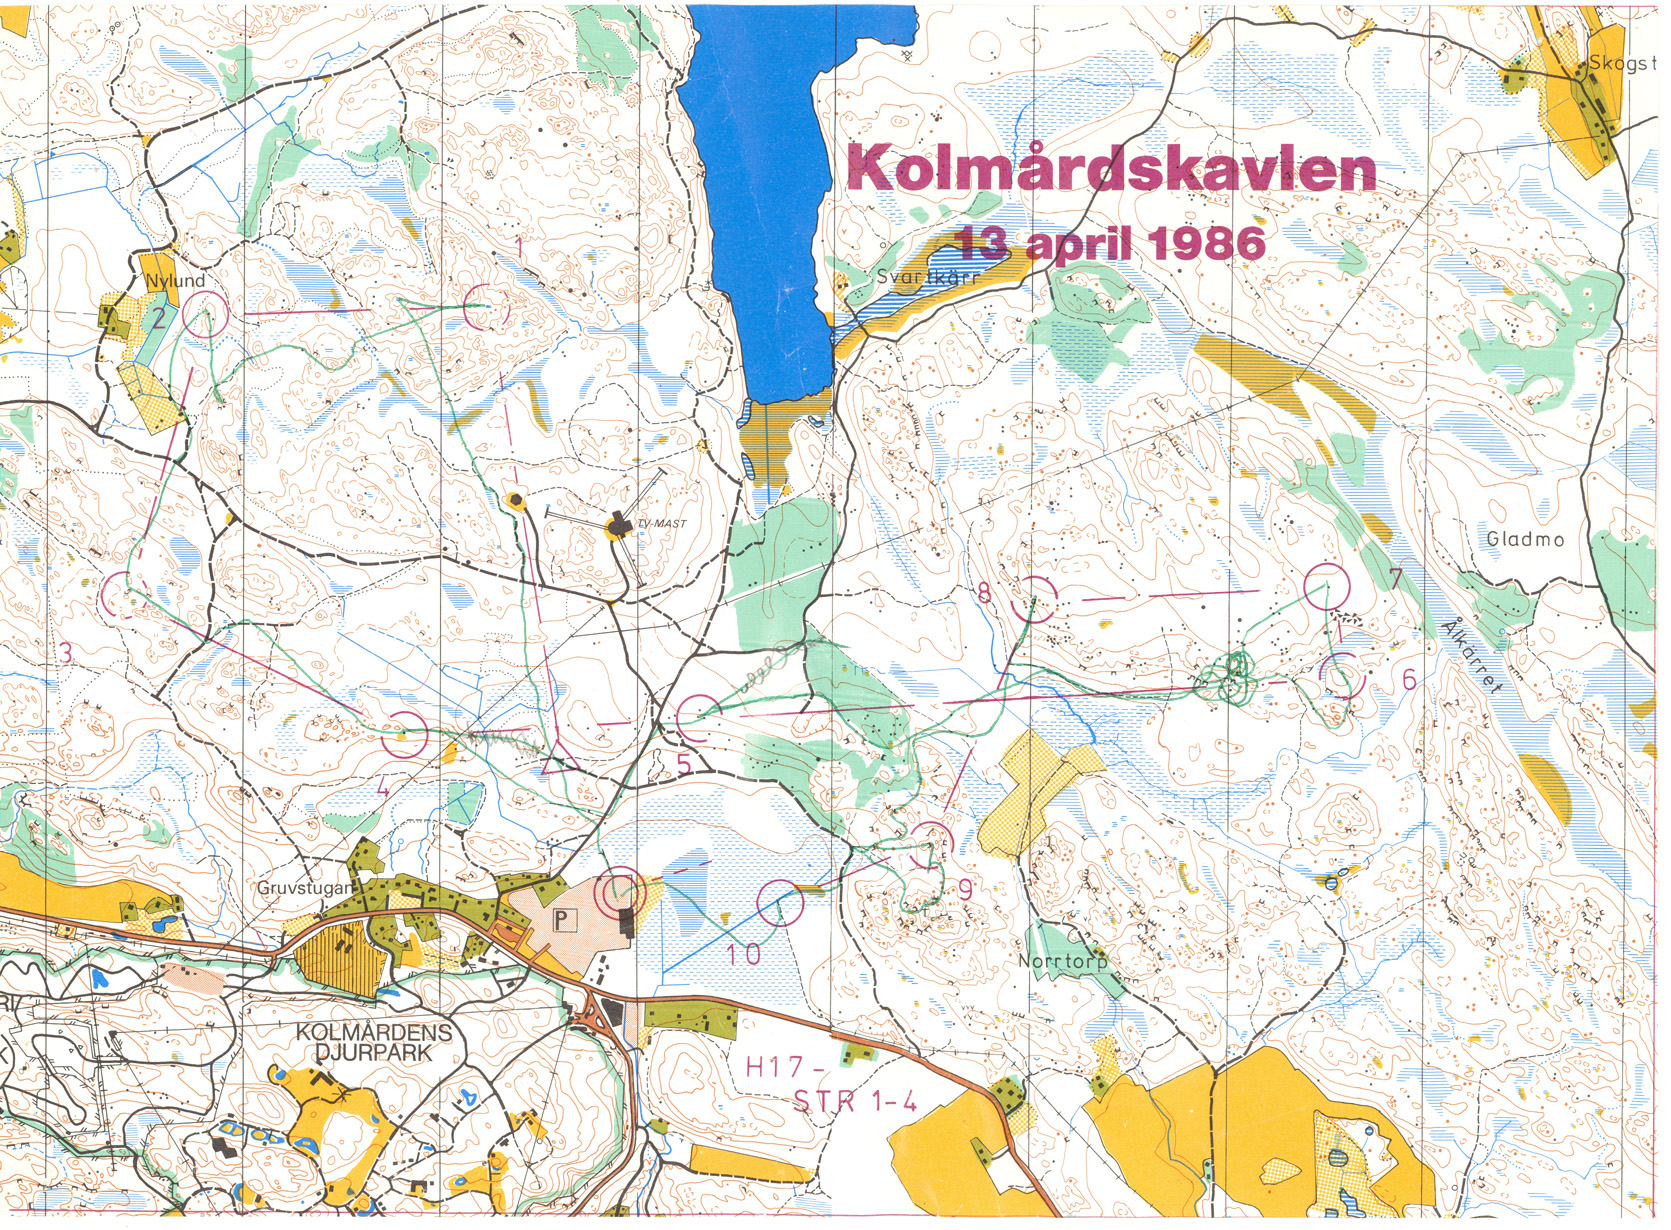 Kolmårdskavlen (13/04/1986)